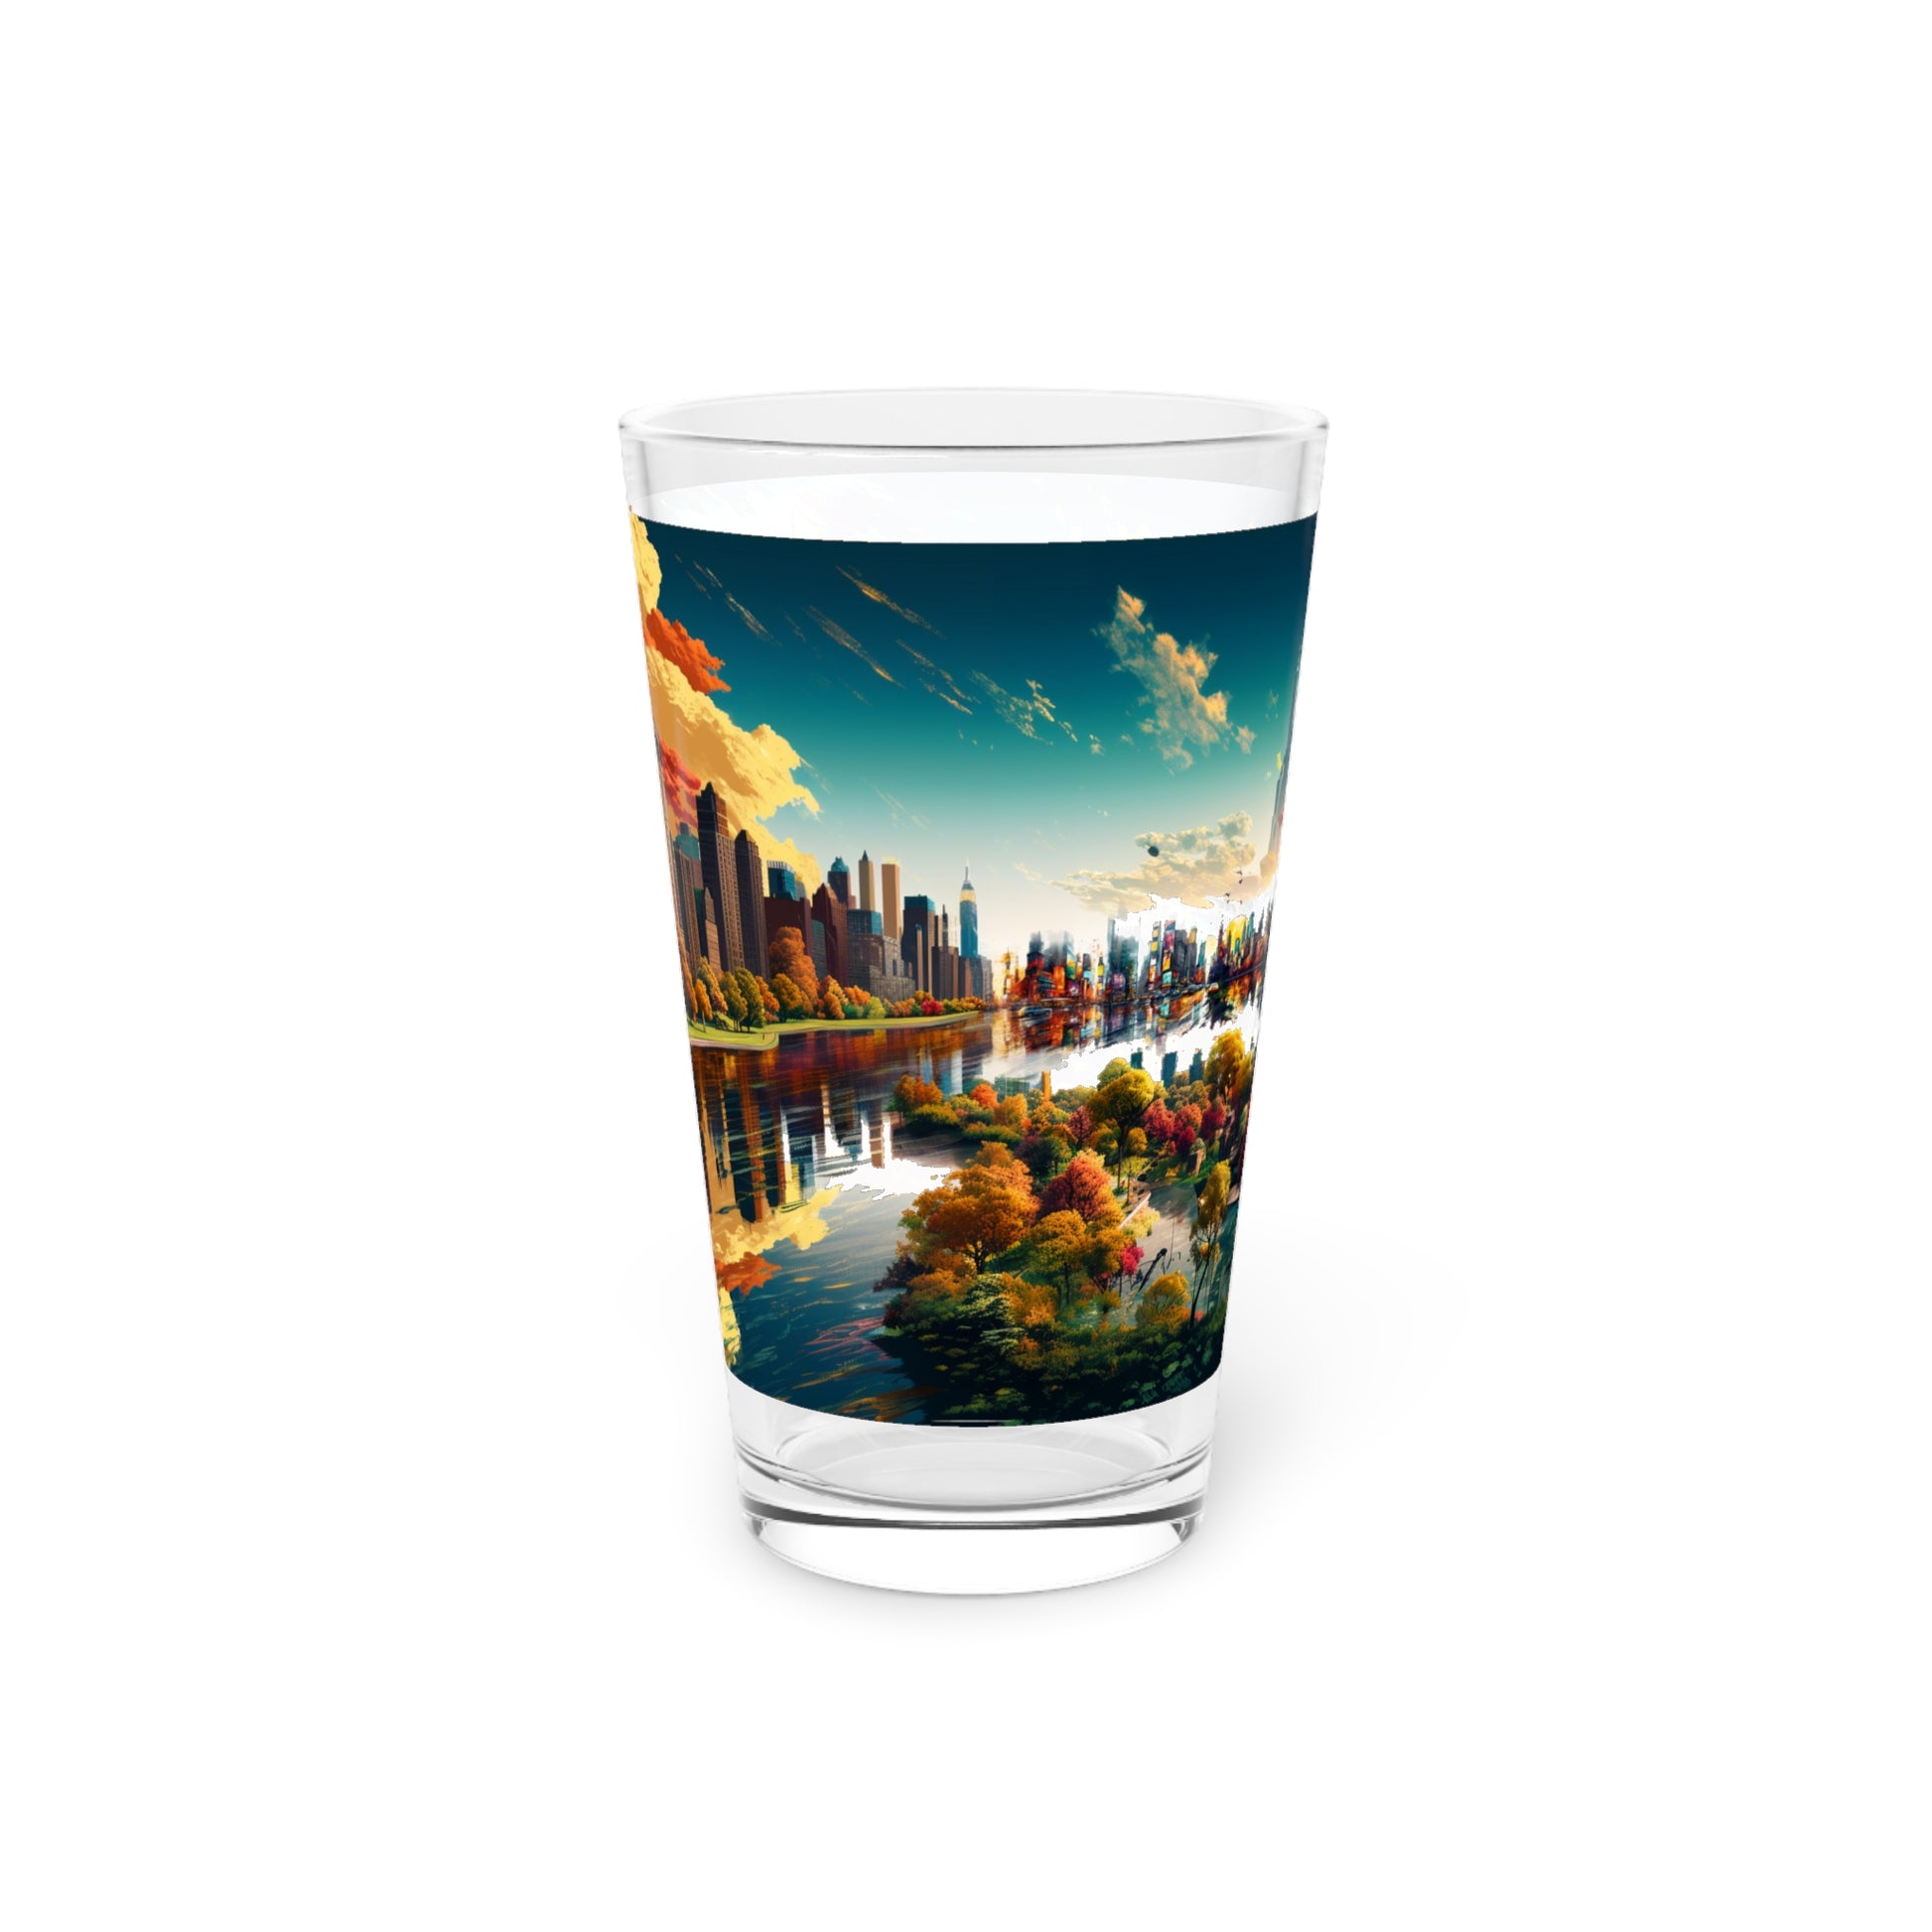 Surreal Cityscape Pint Glass - Stashbox Exclusive - #DreamyNYC #SurrealArt #CityscapeMagic #StashboxDesign #UniquePintGlass